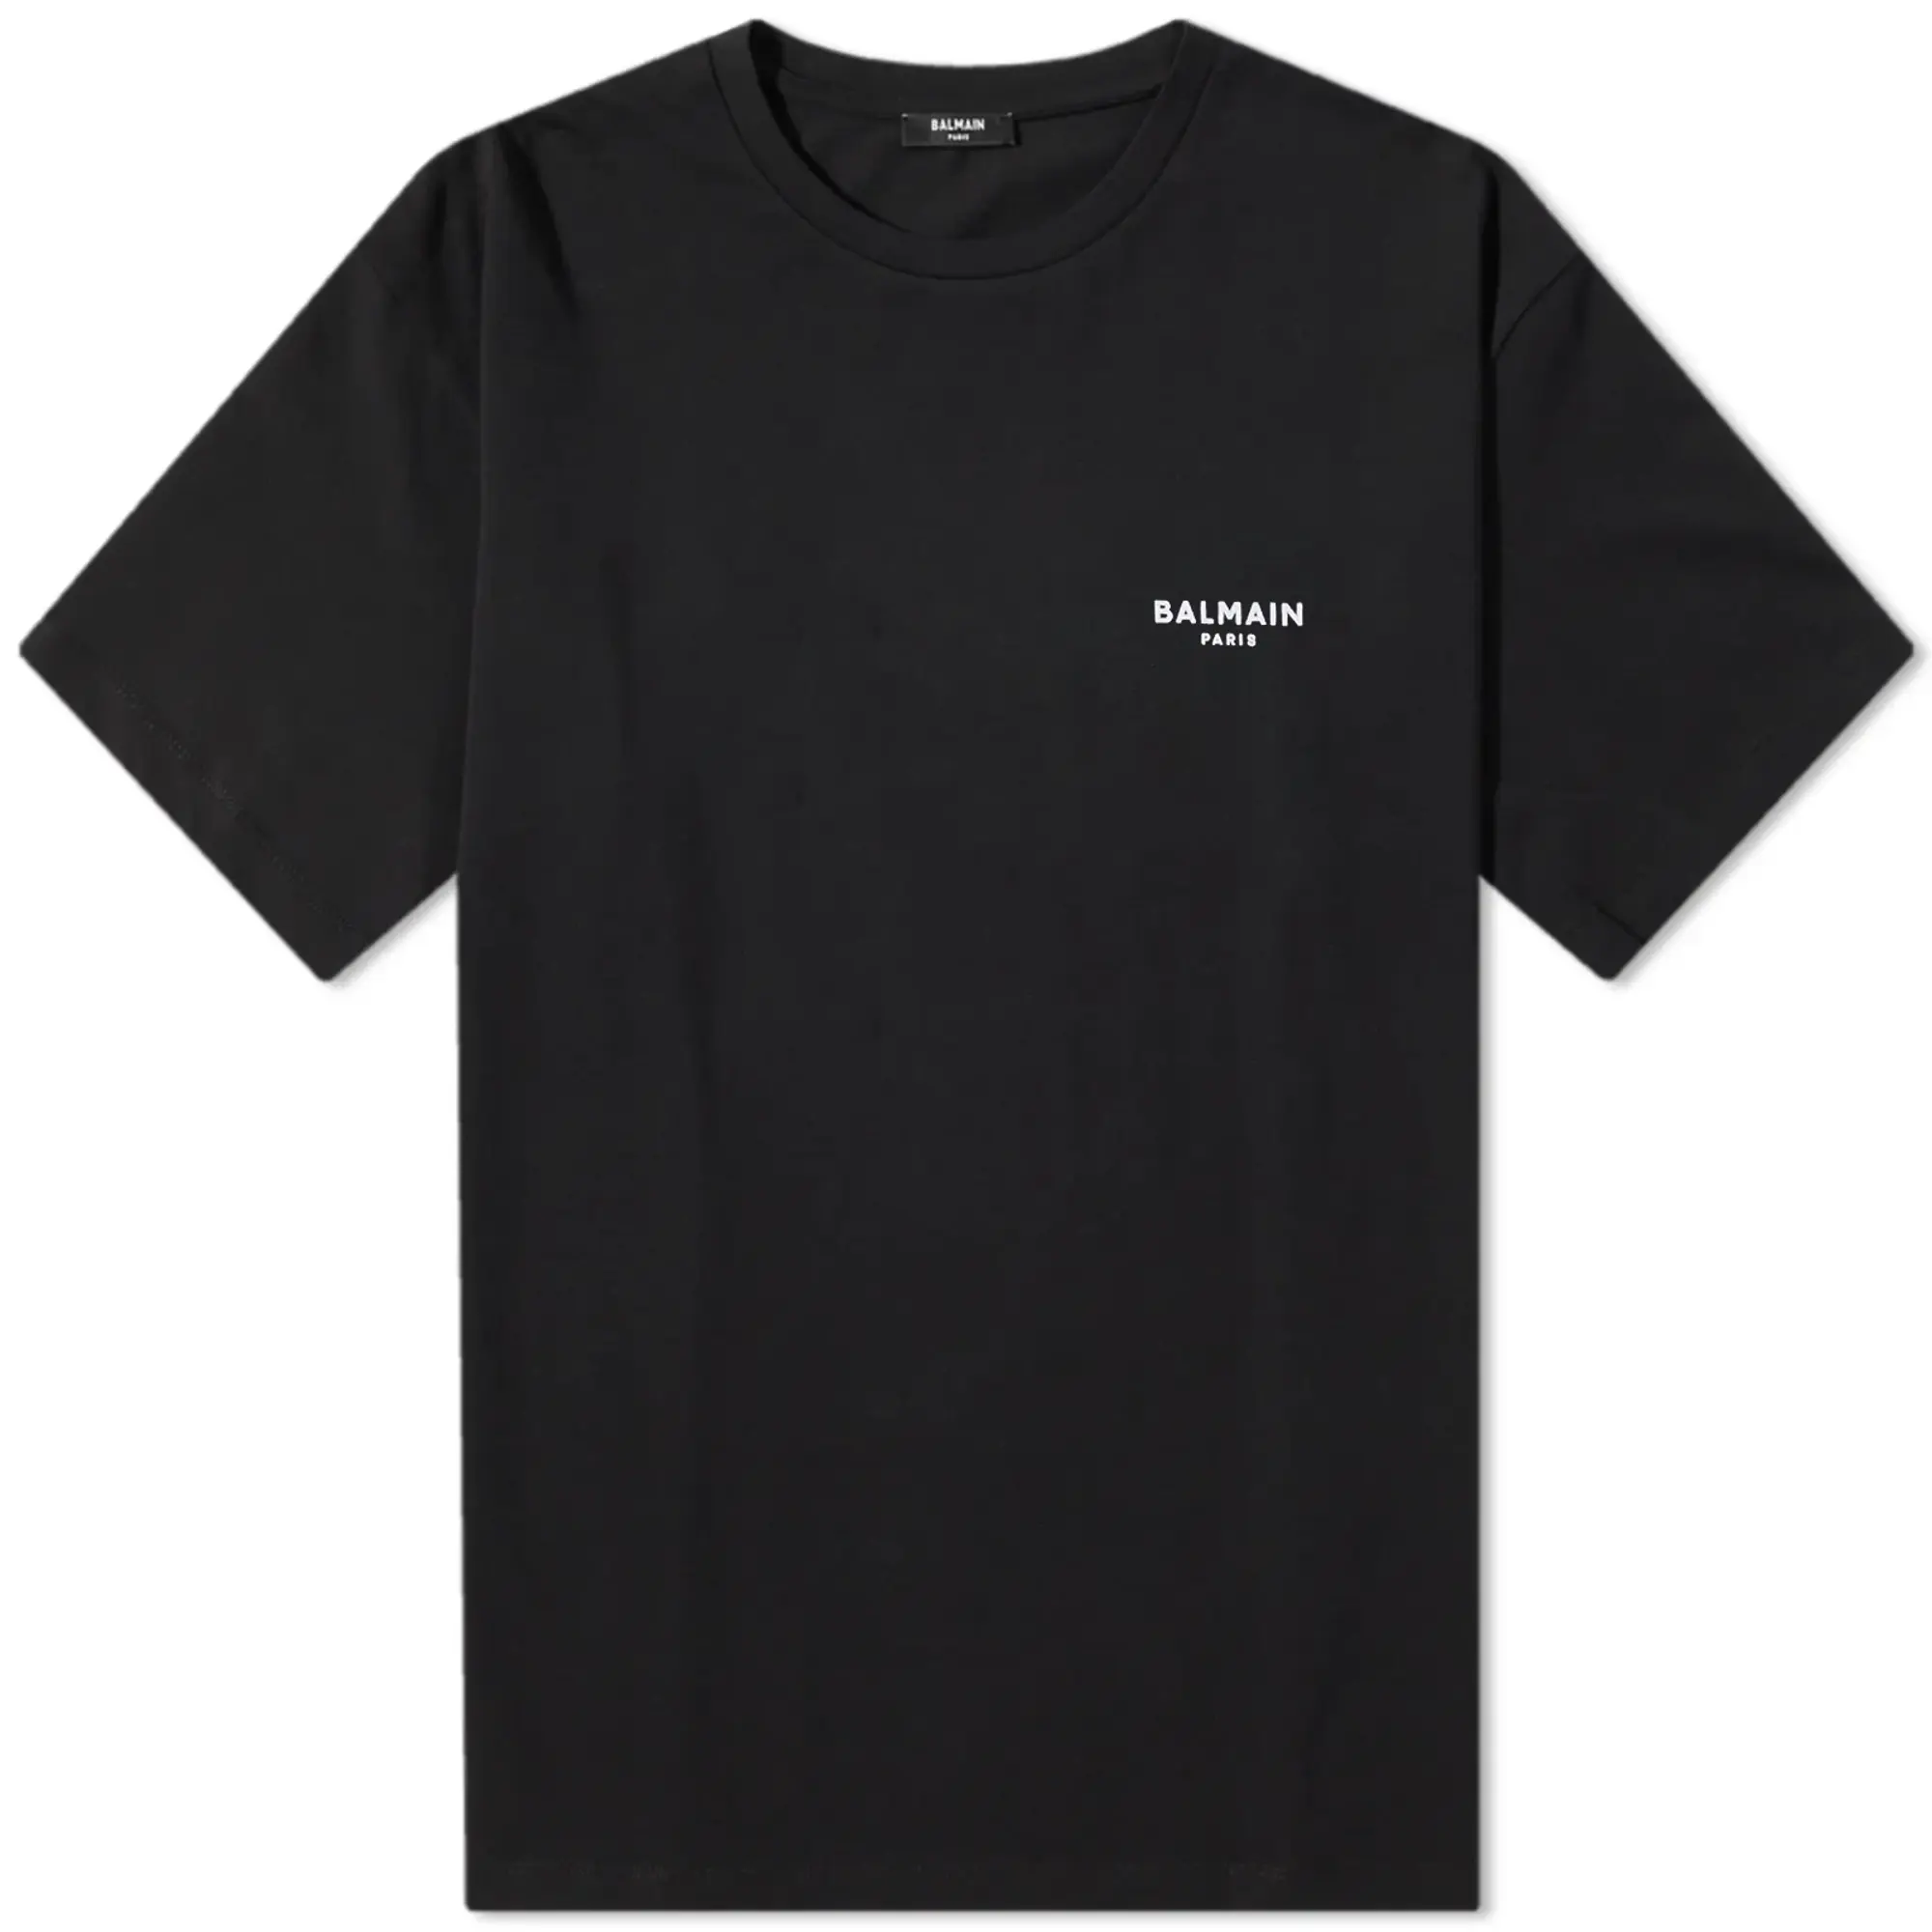 Balmain Men's Flock Small Logo T-Shirt Black/White